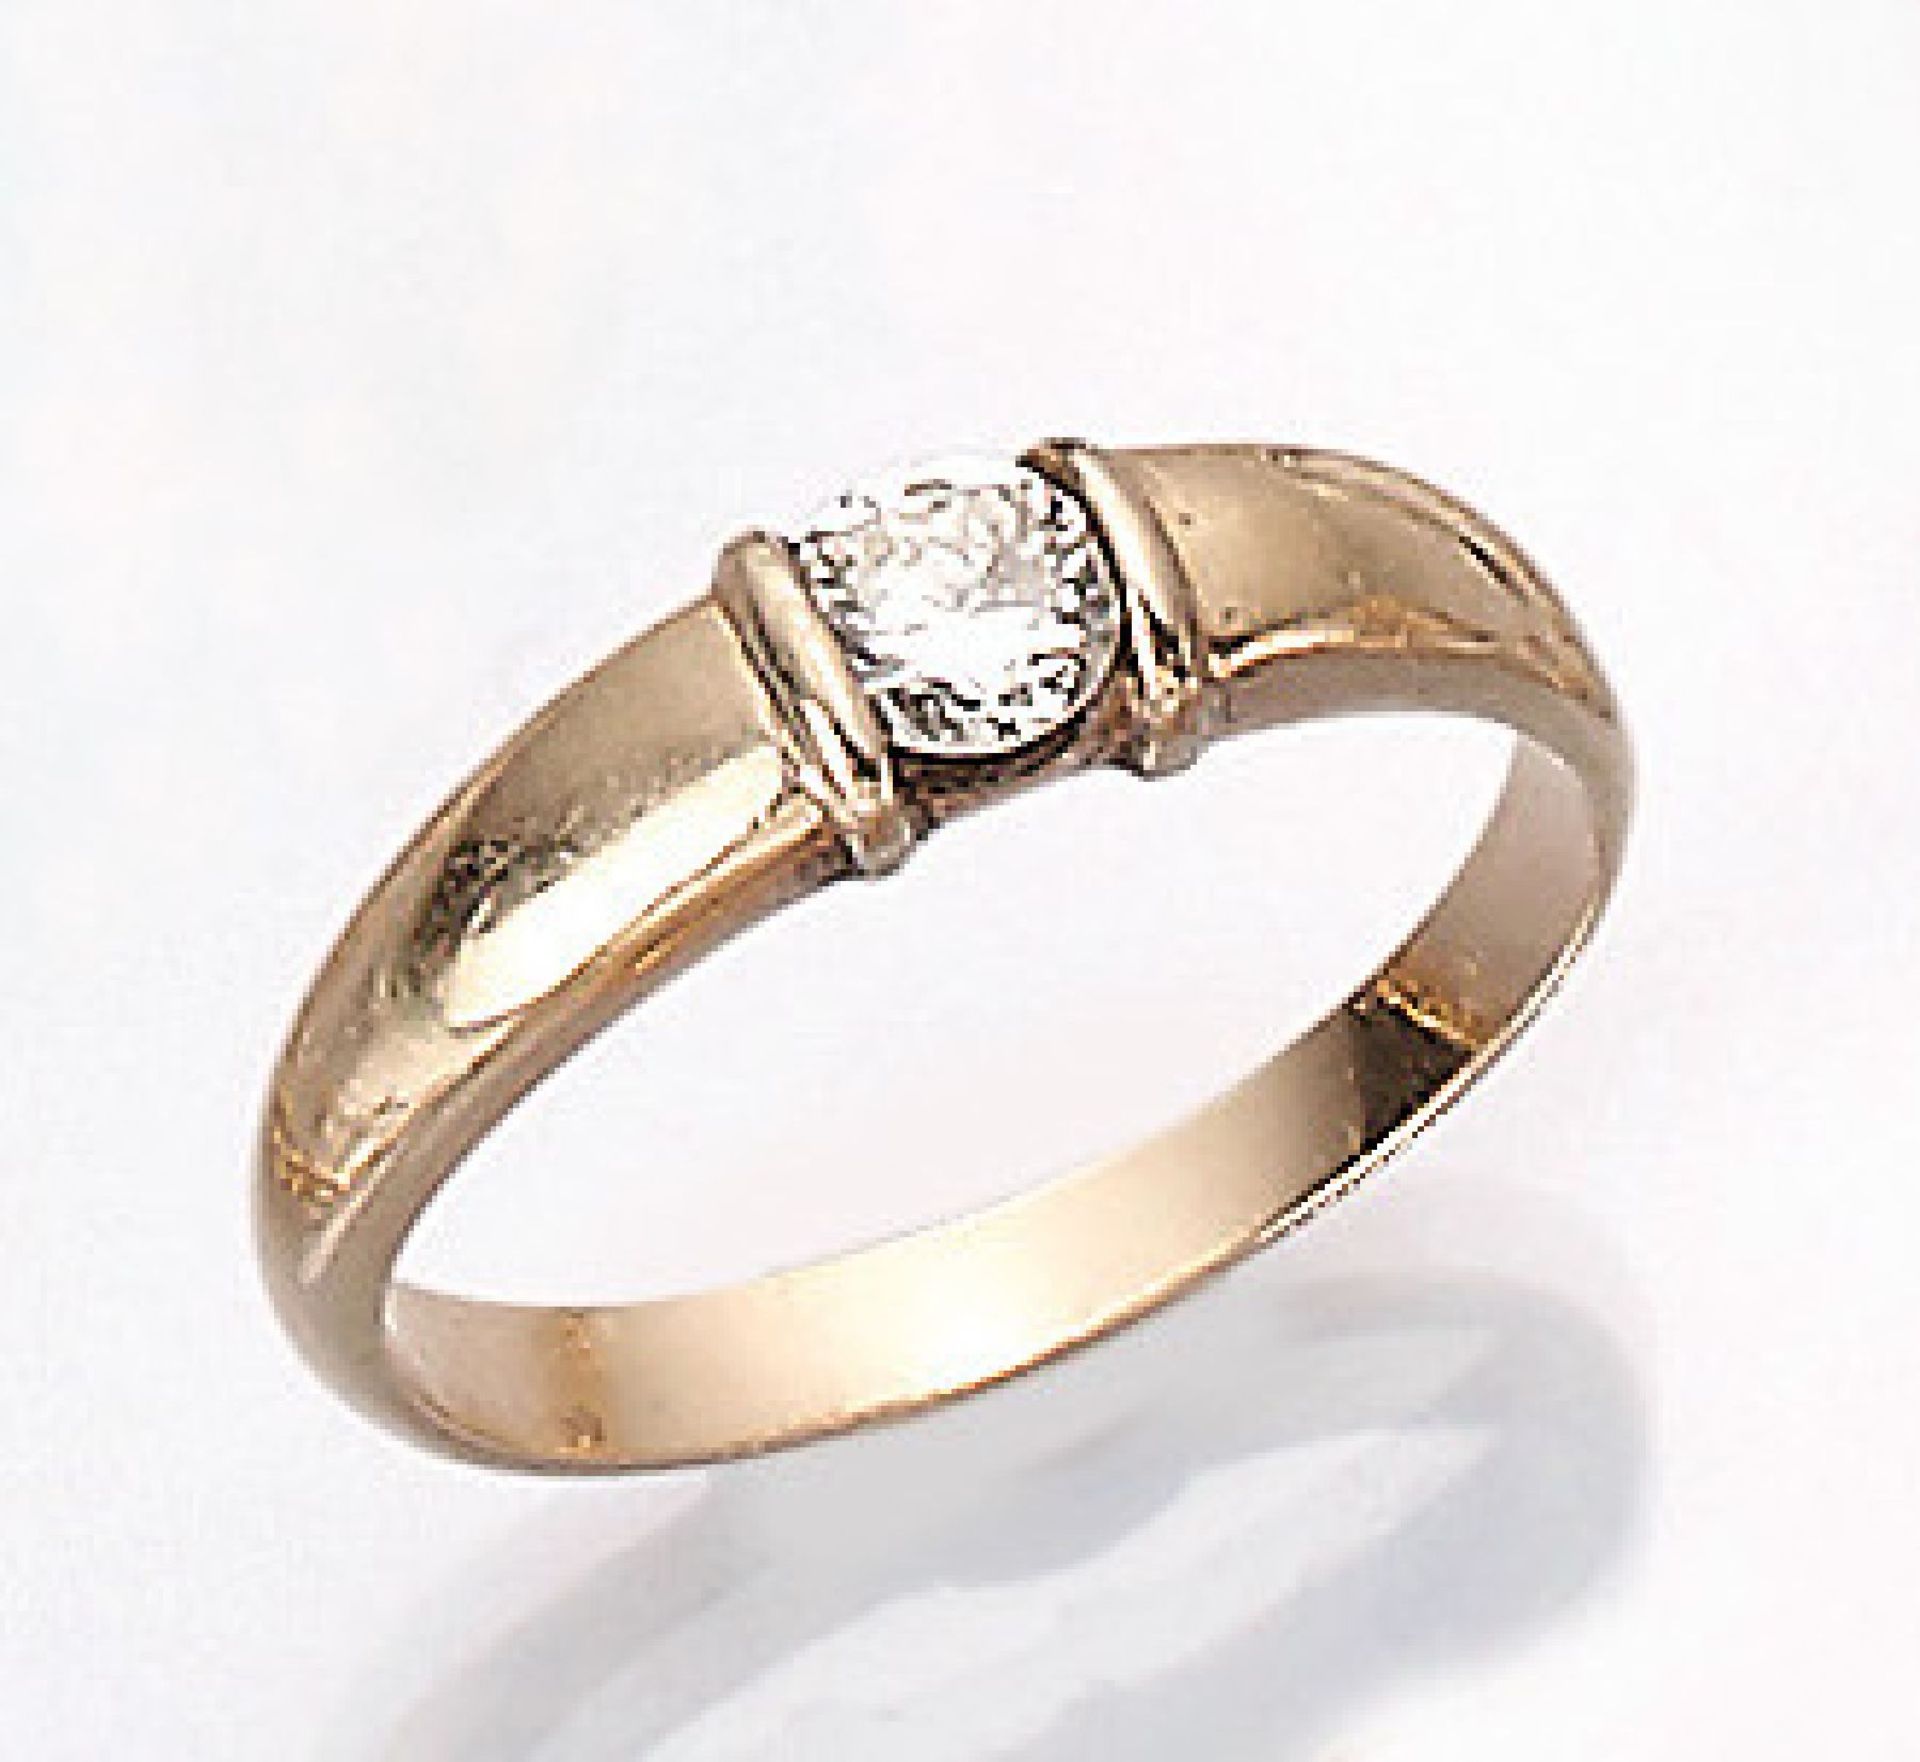 14 kt Gold Ring mit Brillant, GG 585/000, Brillant ca. 0.41 ct Weiß/vs, Spannringoptik, ca. 4.3 g,